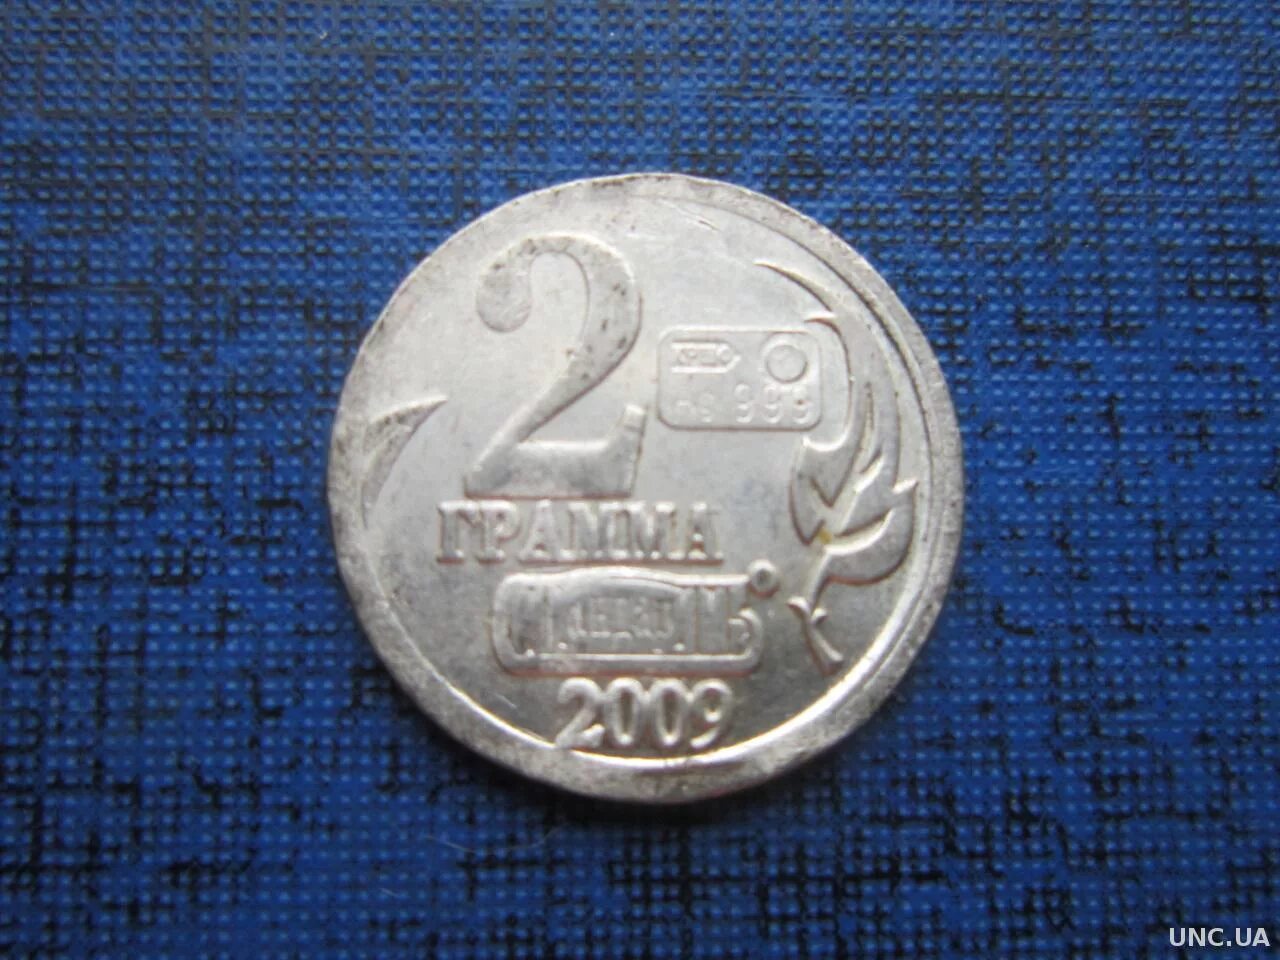 Цена монеты грамм